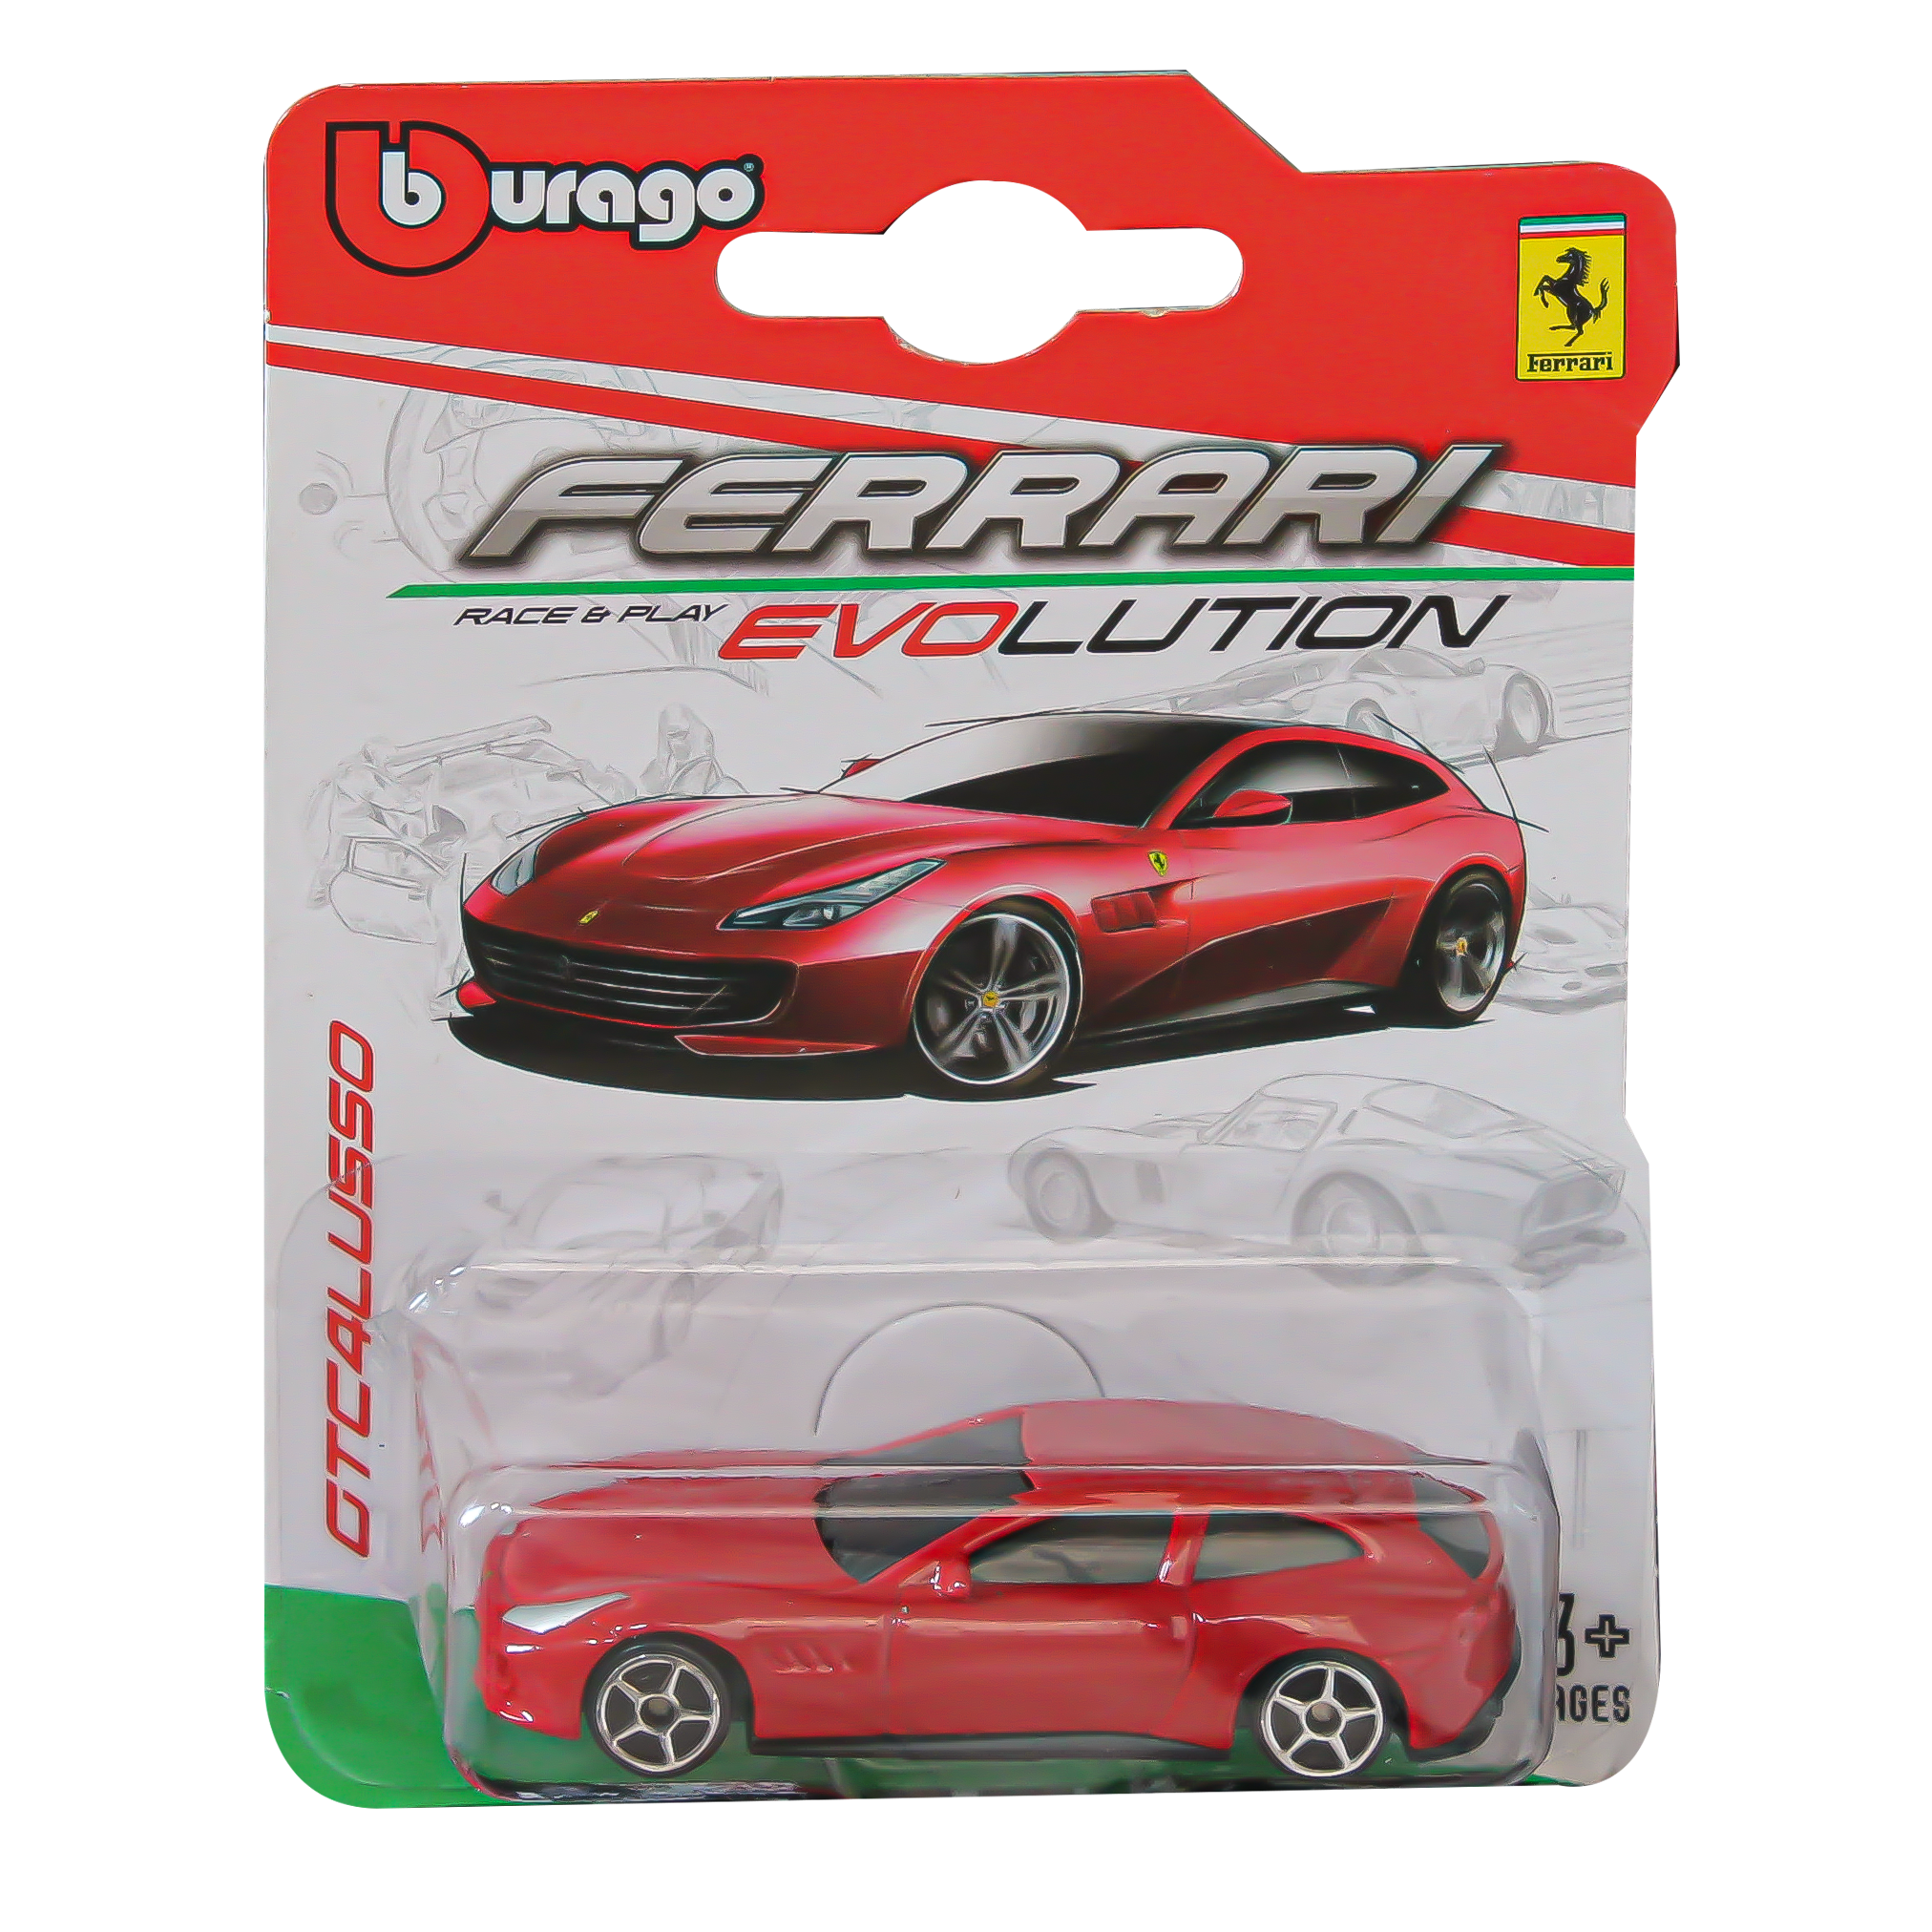 Burago Ferrari Evalution Race & Play Car - GTC 4 LUSSO